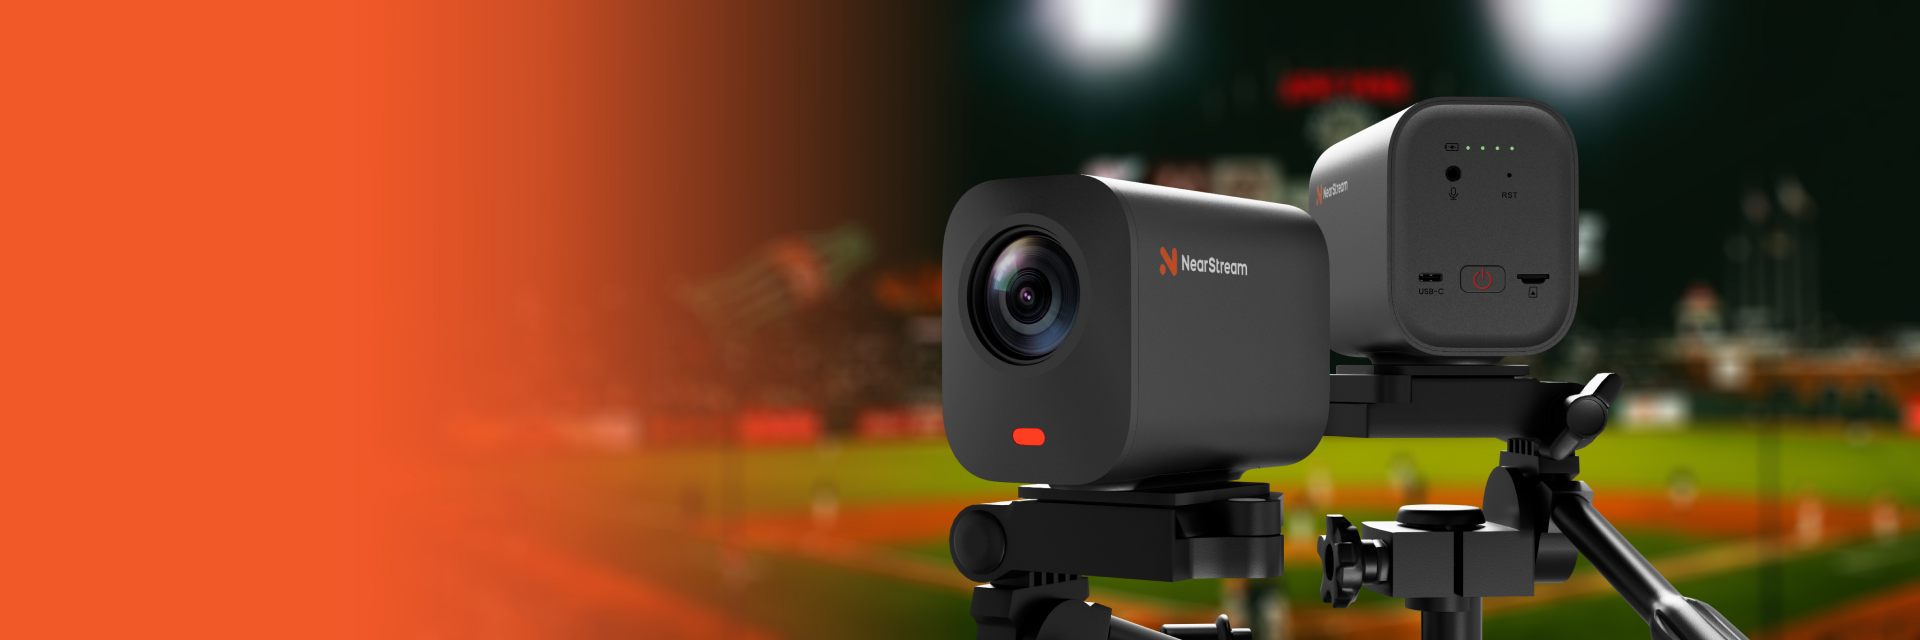 NearStream VM33 - All-In-One Wireless Streaming Camera